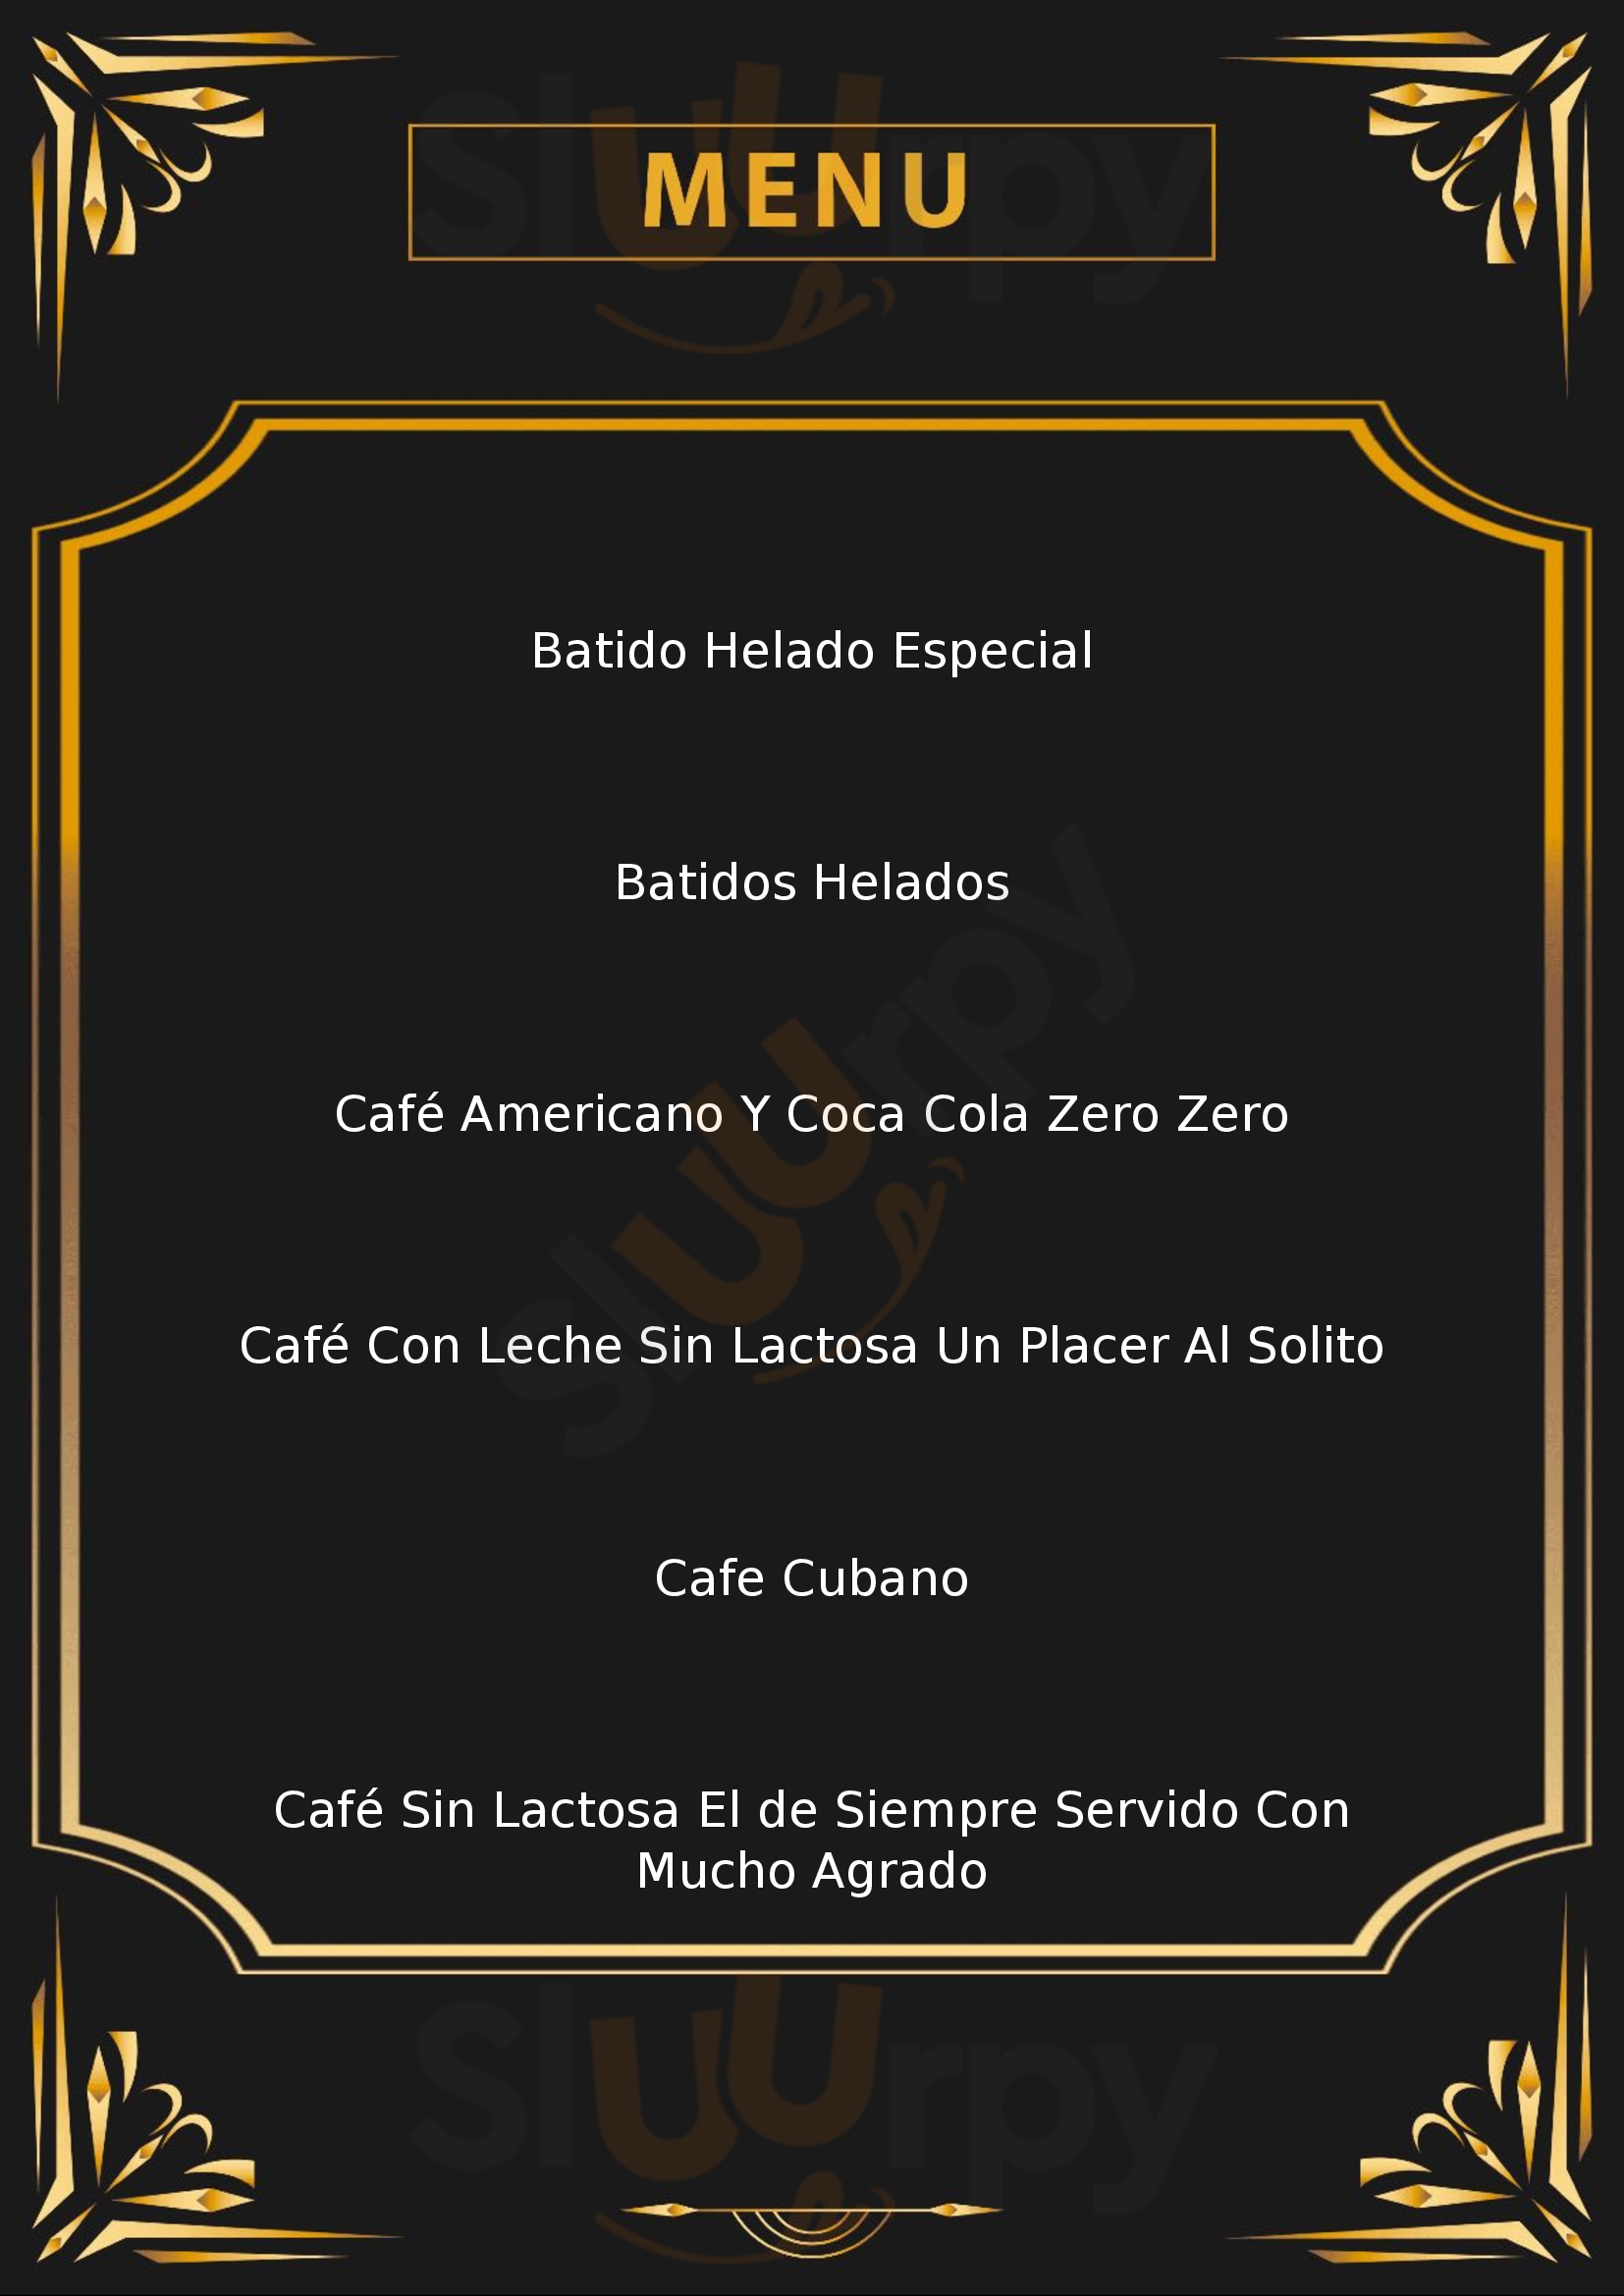 Caffe Paris Sevilla Menu - 1